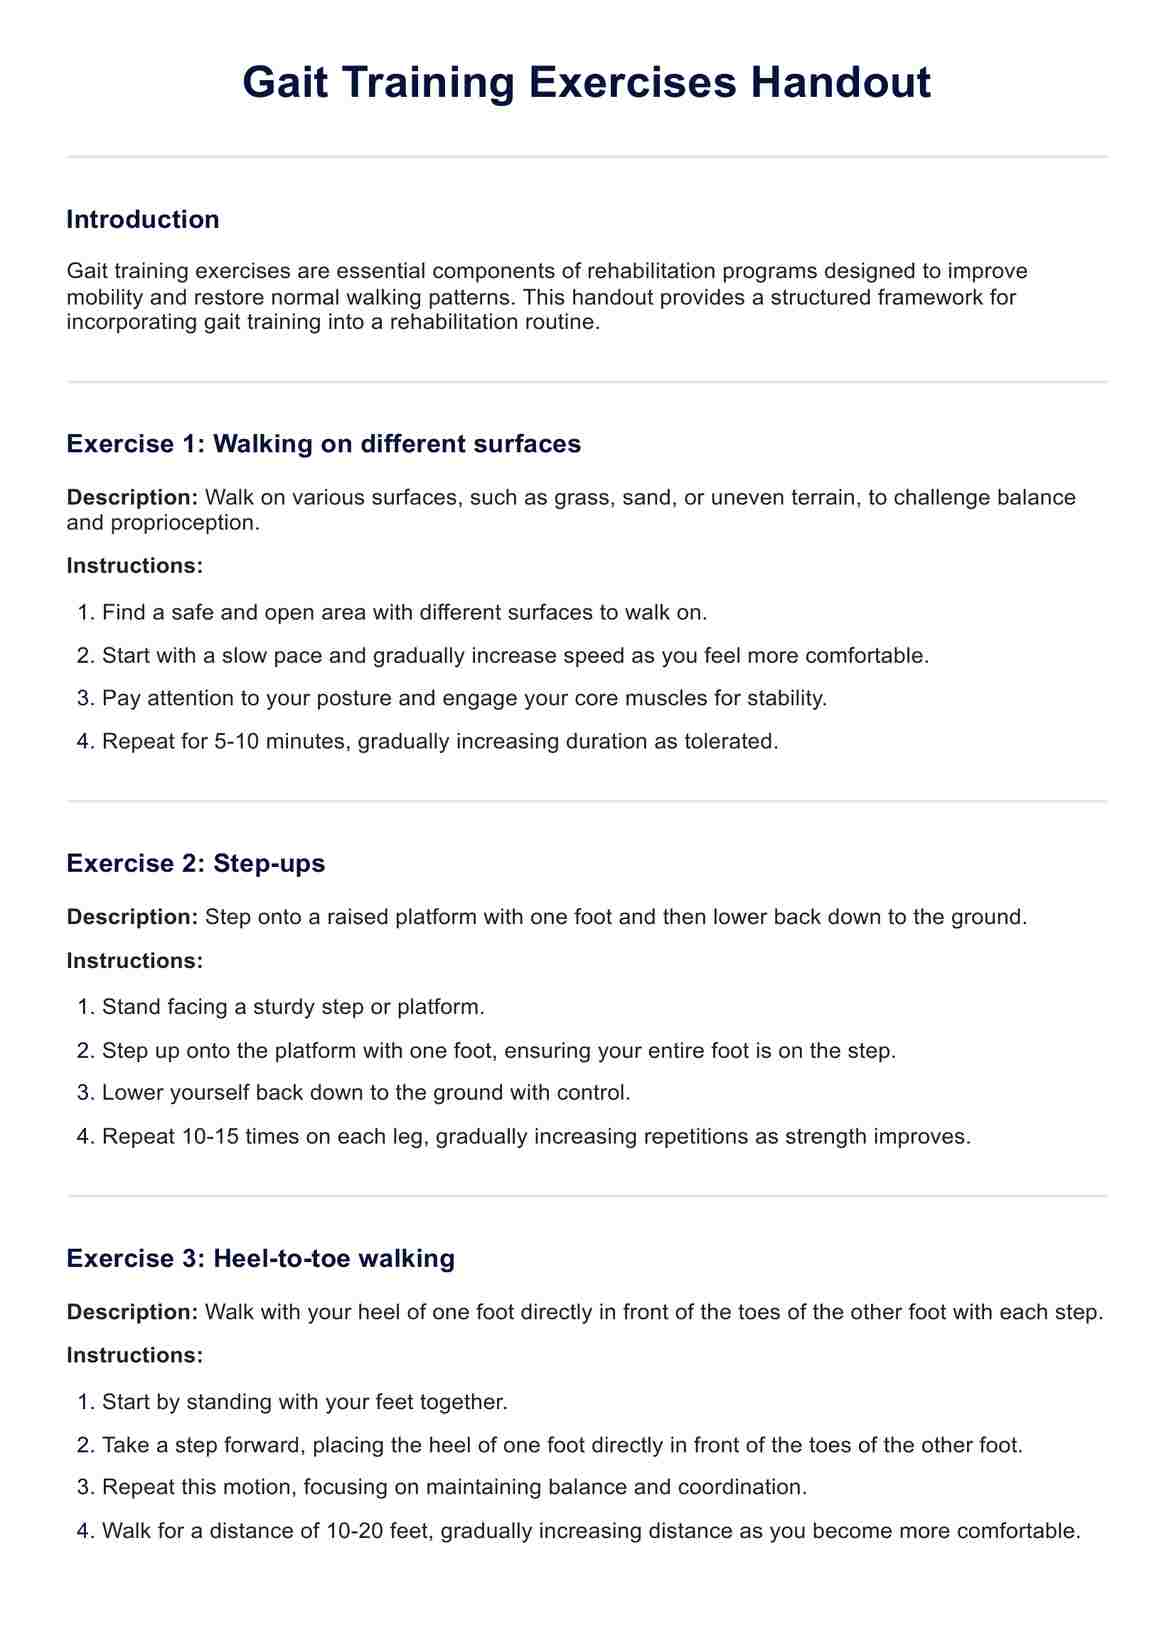 Gait Training Exercises Handout PDF Example